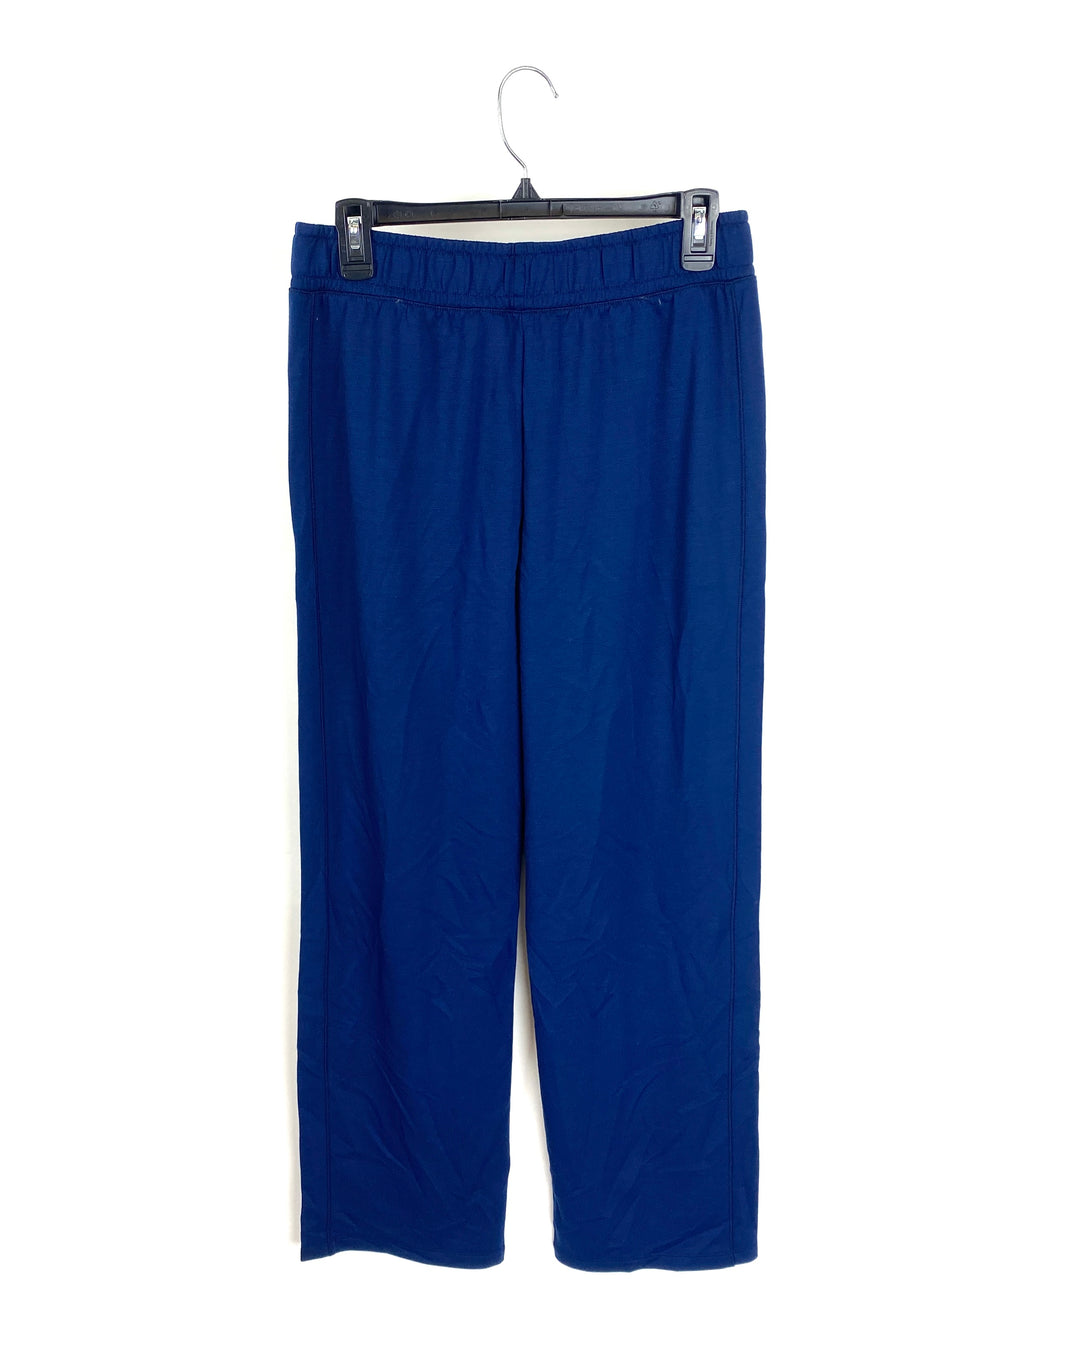 Navy Blue Drawstring Waist Sweatpants - Small and Medium